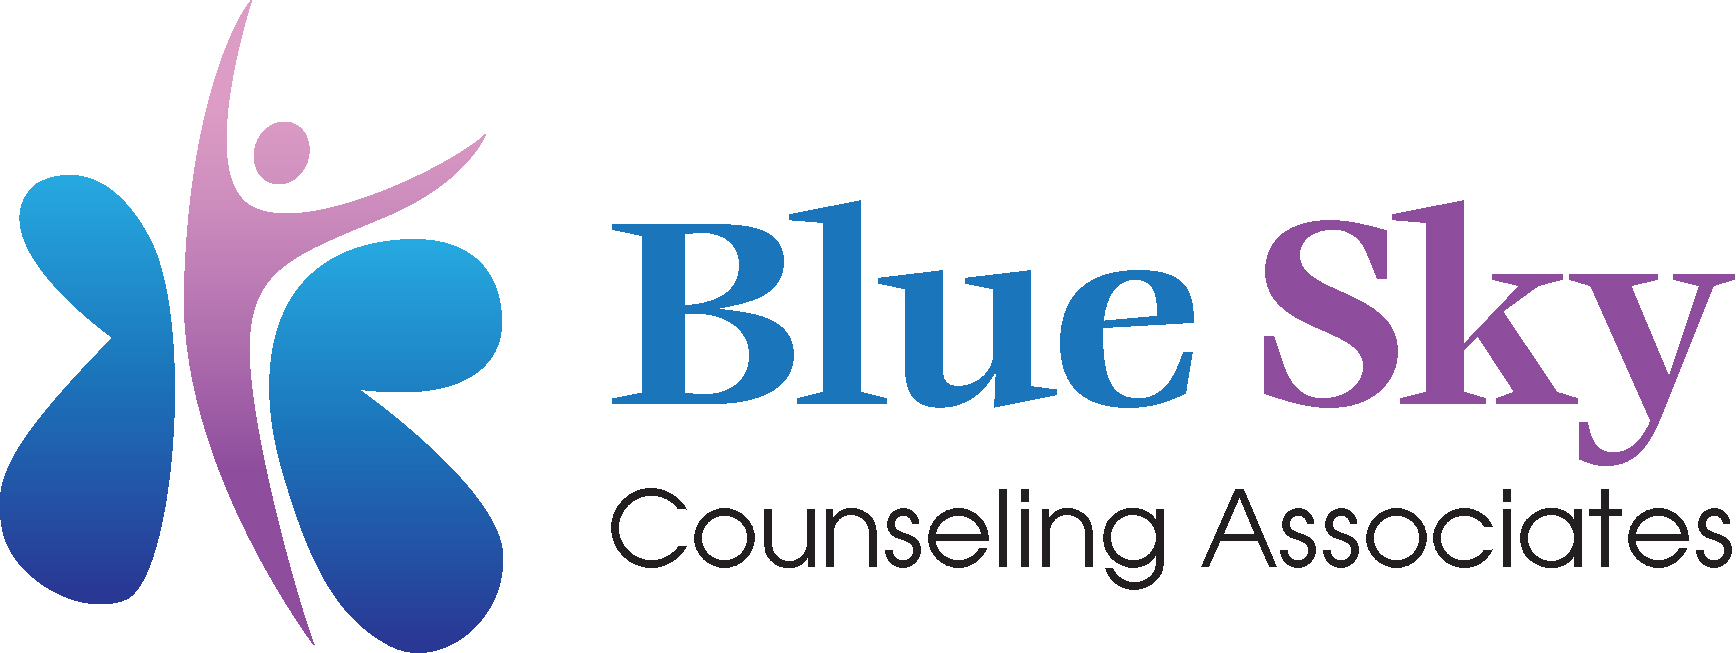 Blue Sky Counseling Associates